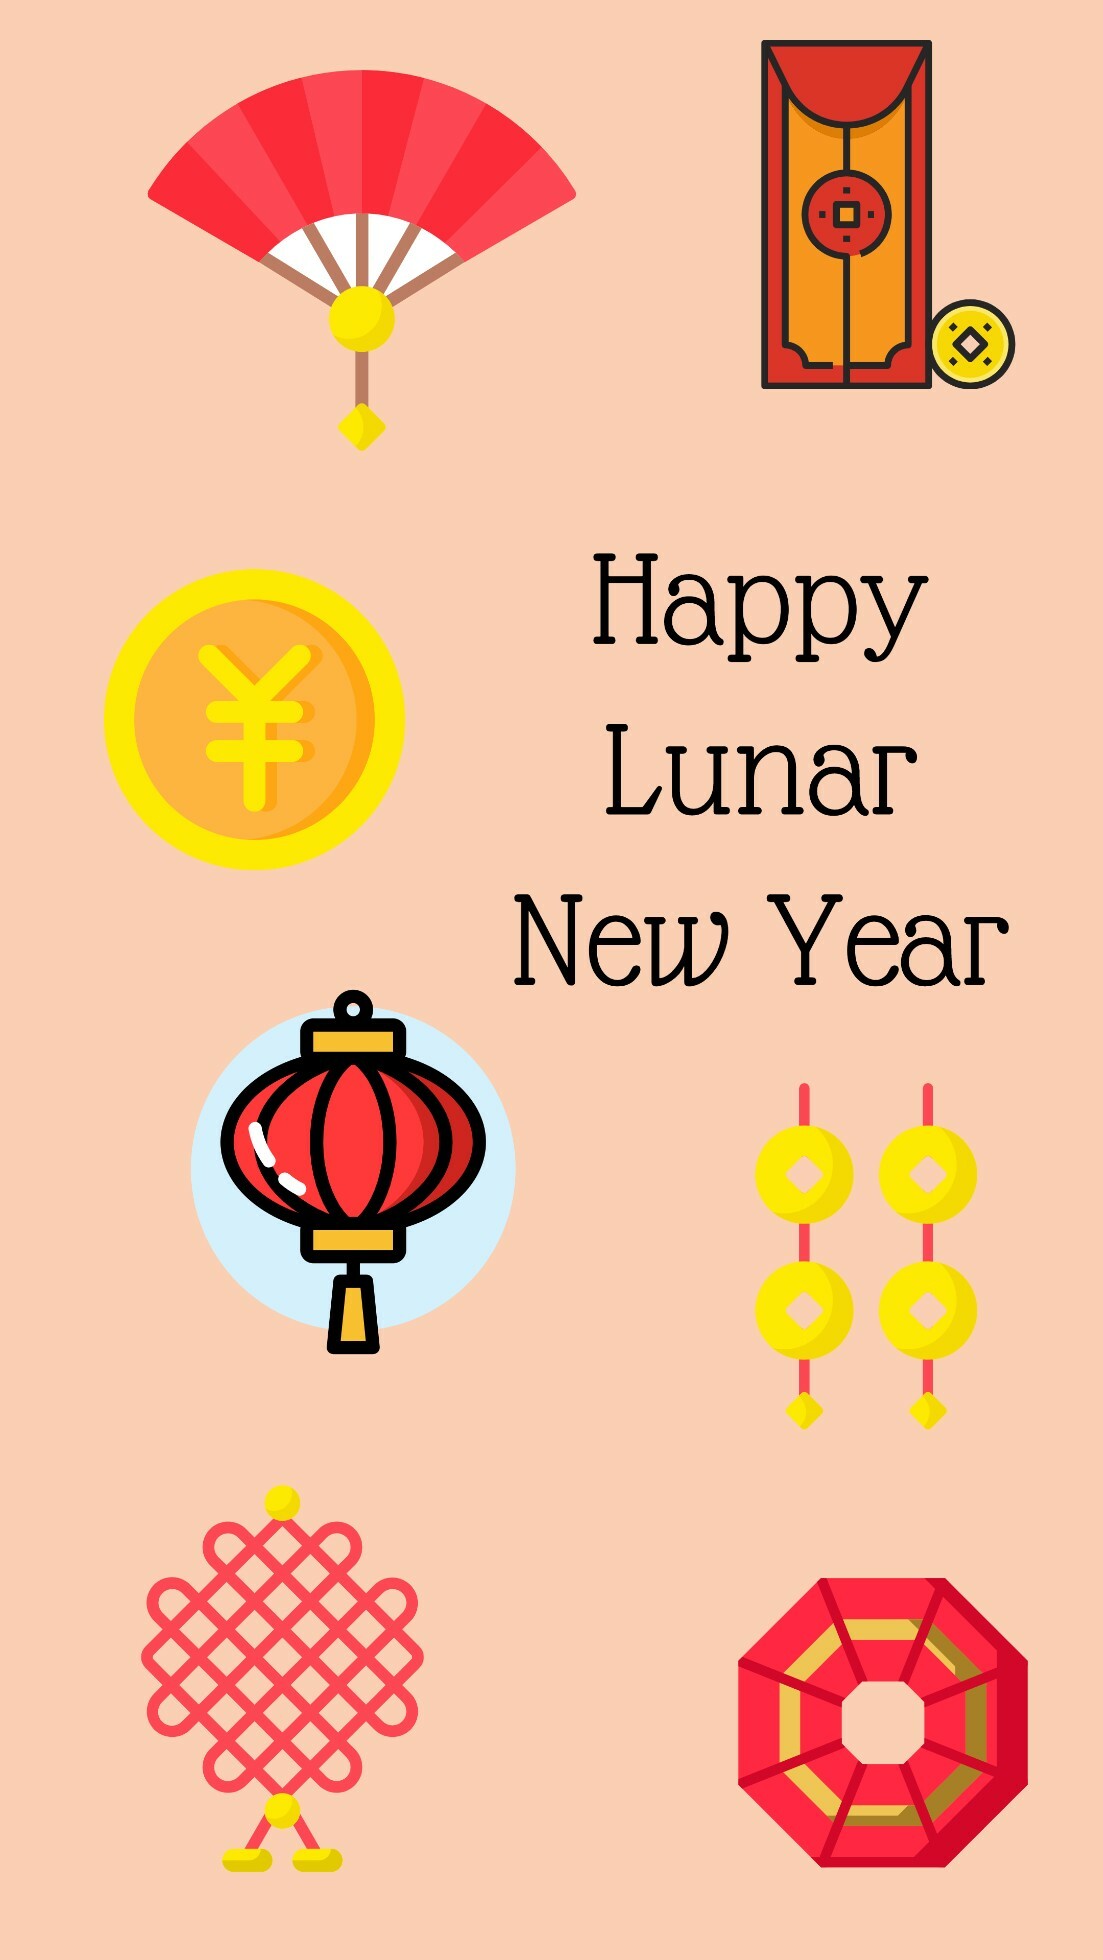 Lunar New Year template